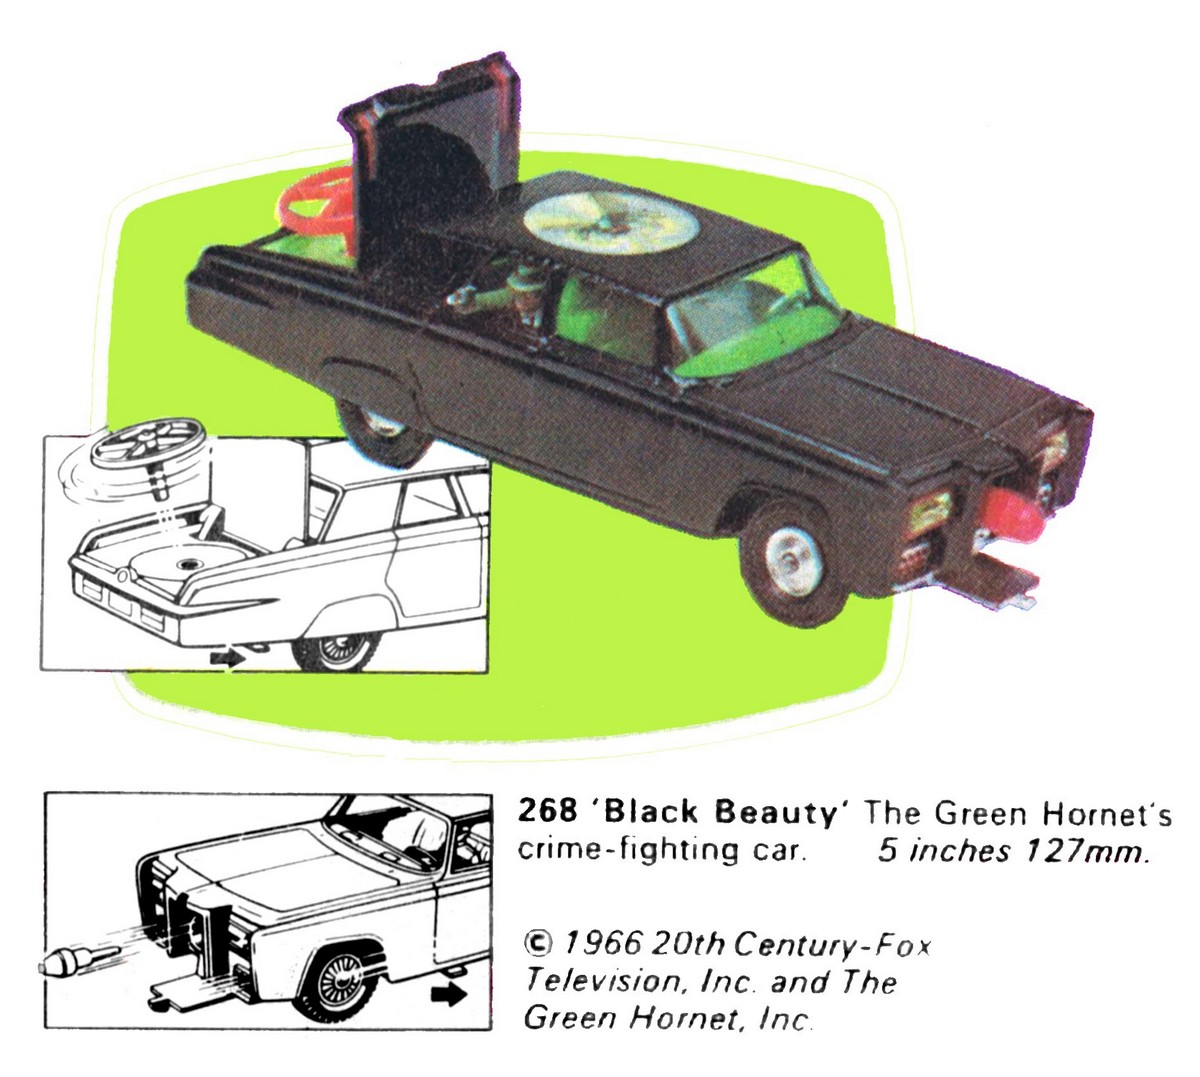 Corgi Corgi Toy Car The Green Hornet BLACK BEAUTY Made in Britain True Vintage 